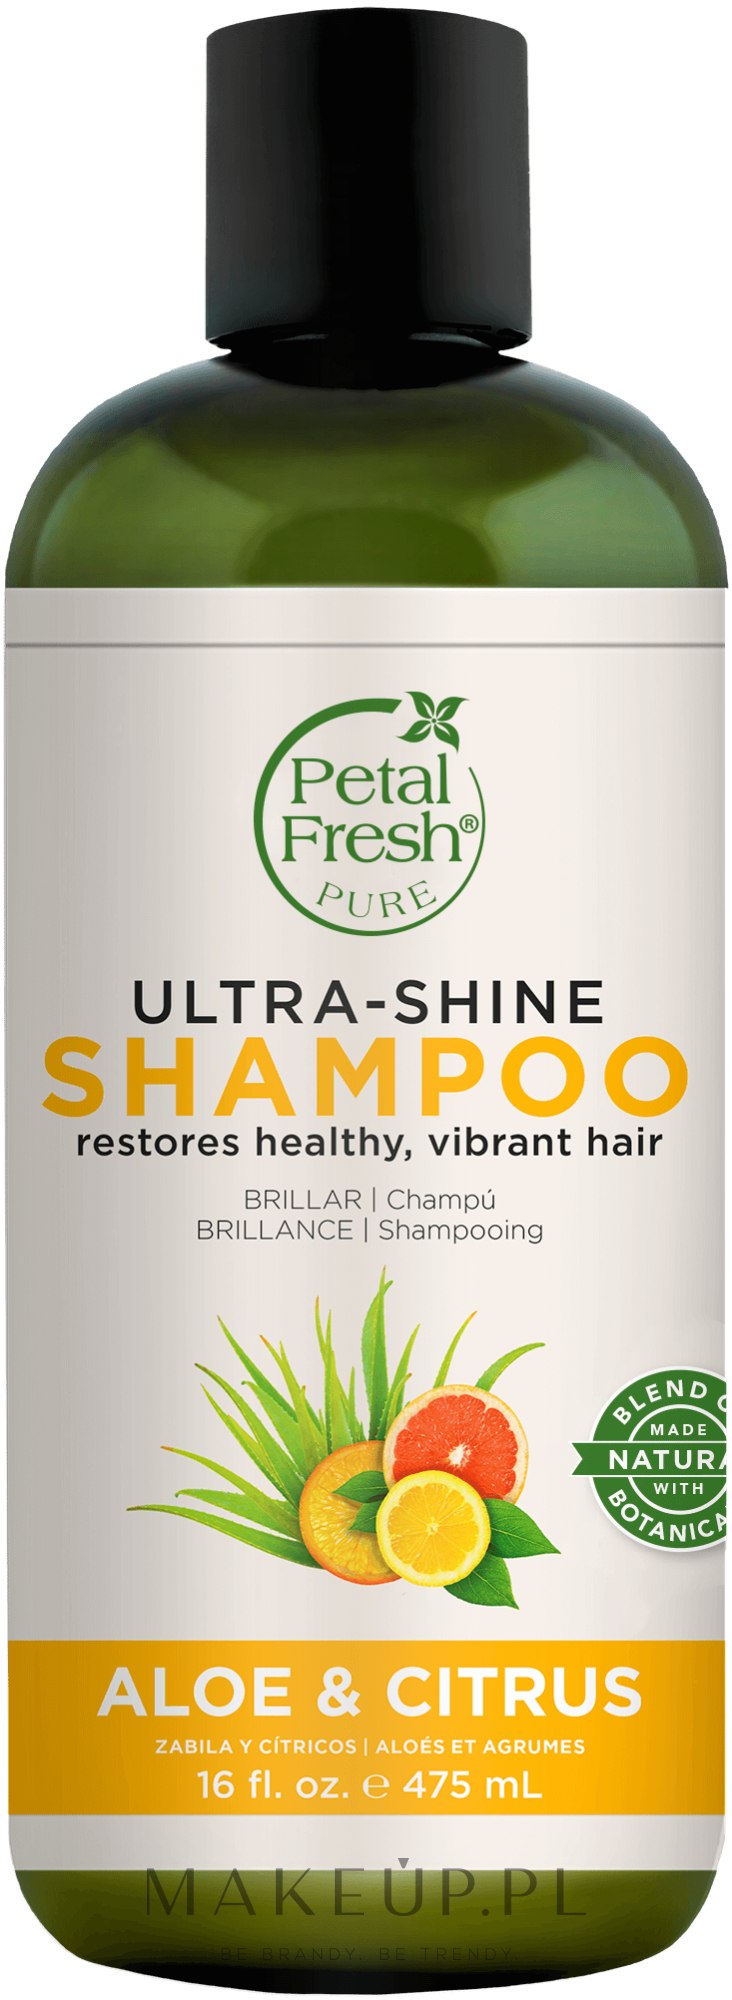 petal fresh pure szampon